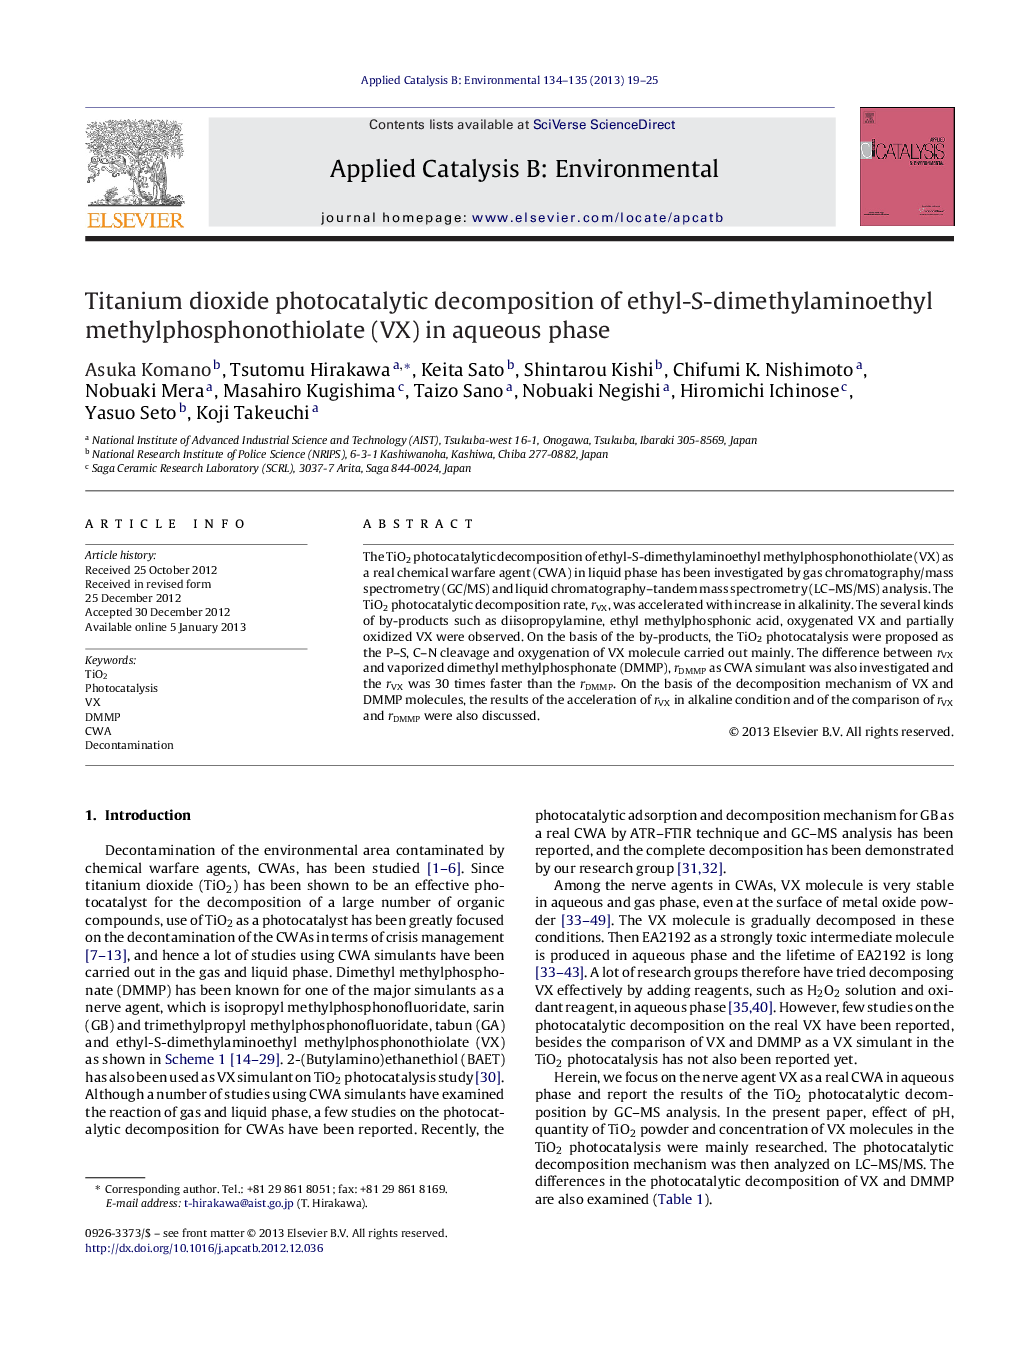 Titanium dioxide photocatalytic decomposition of ethyl-S-dimethylaminoethyl methylphosphonothiolate (VX) in aqueous phase